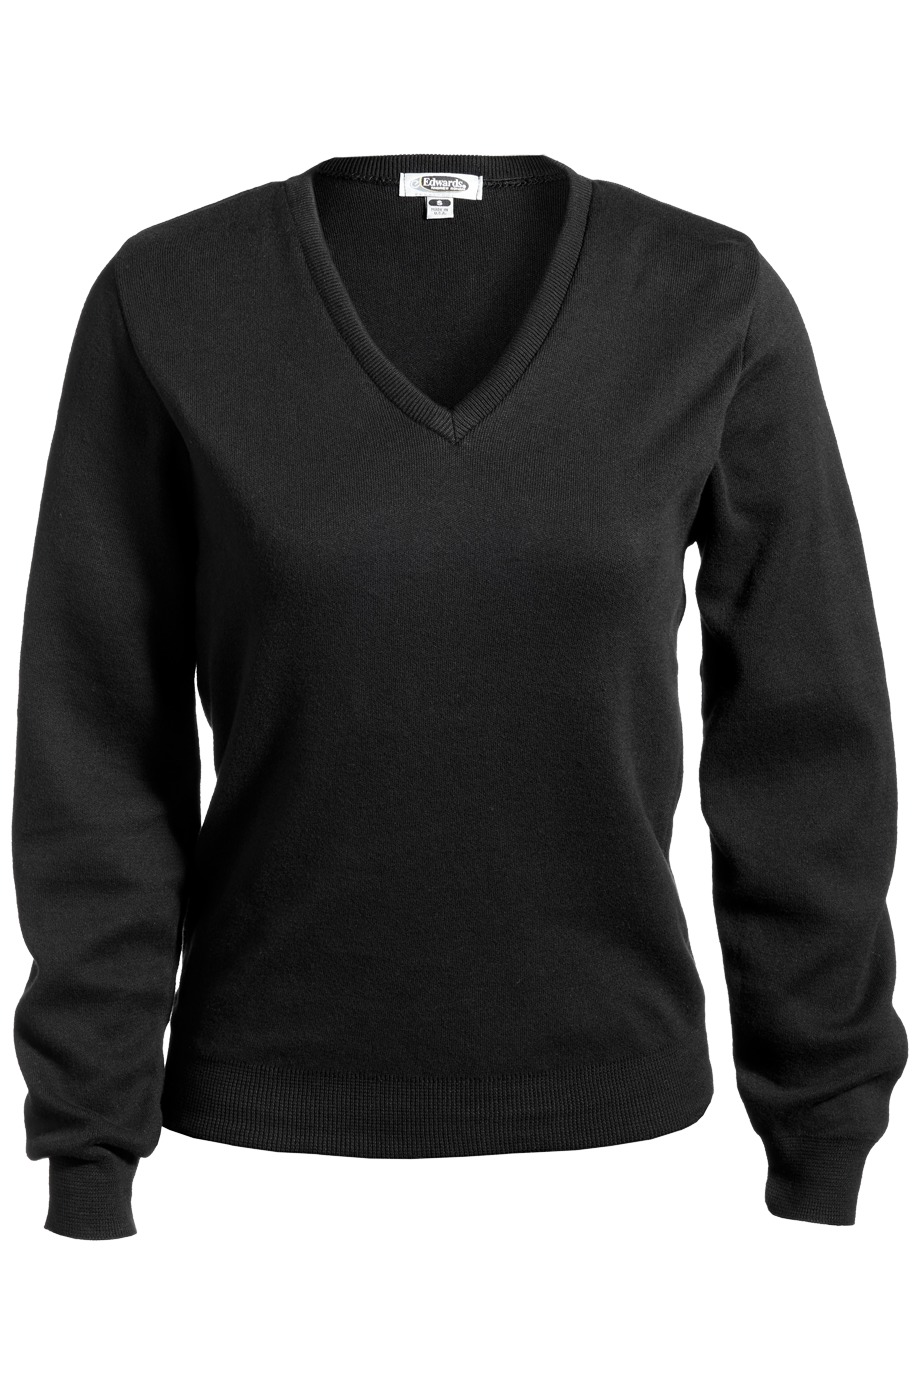 Edwards Garment 7090 - Ladies' V-Neck Cotton Sweater